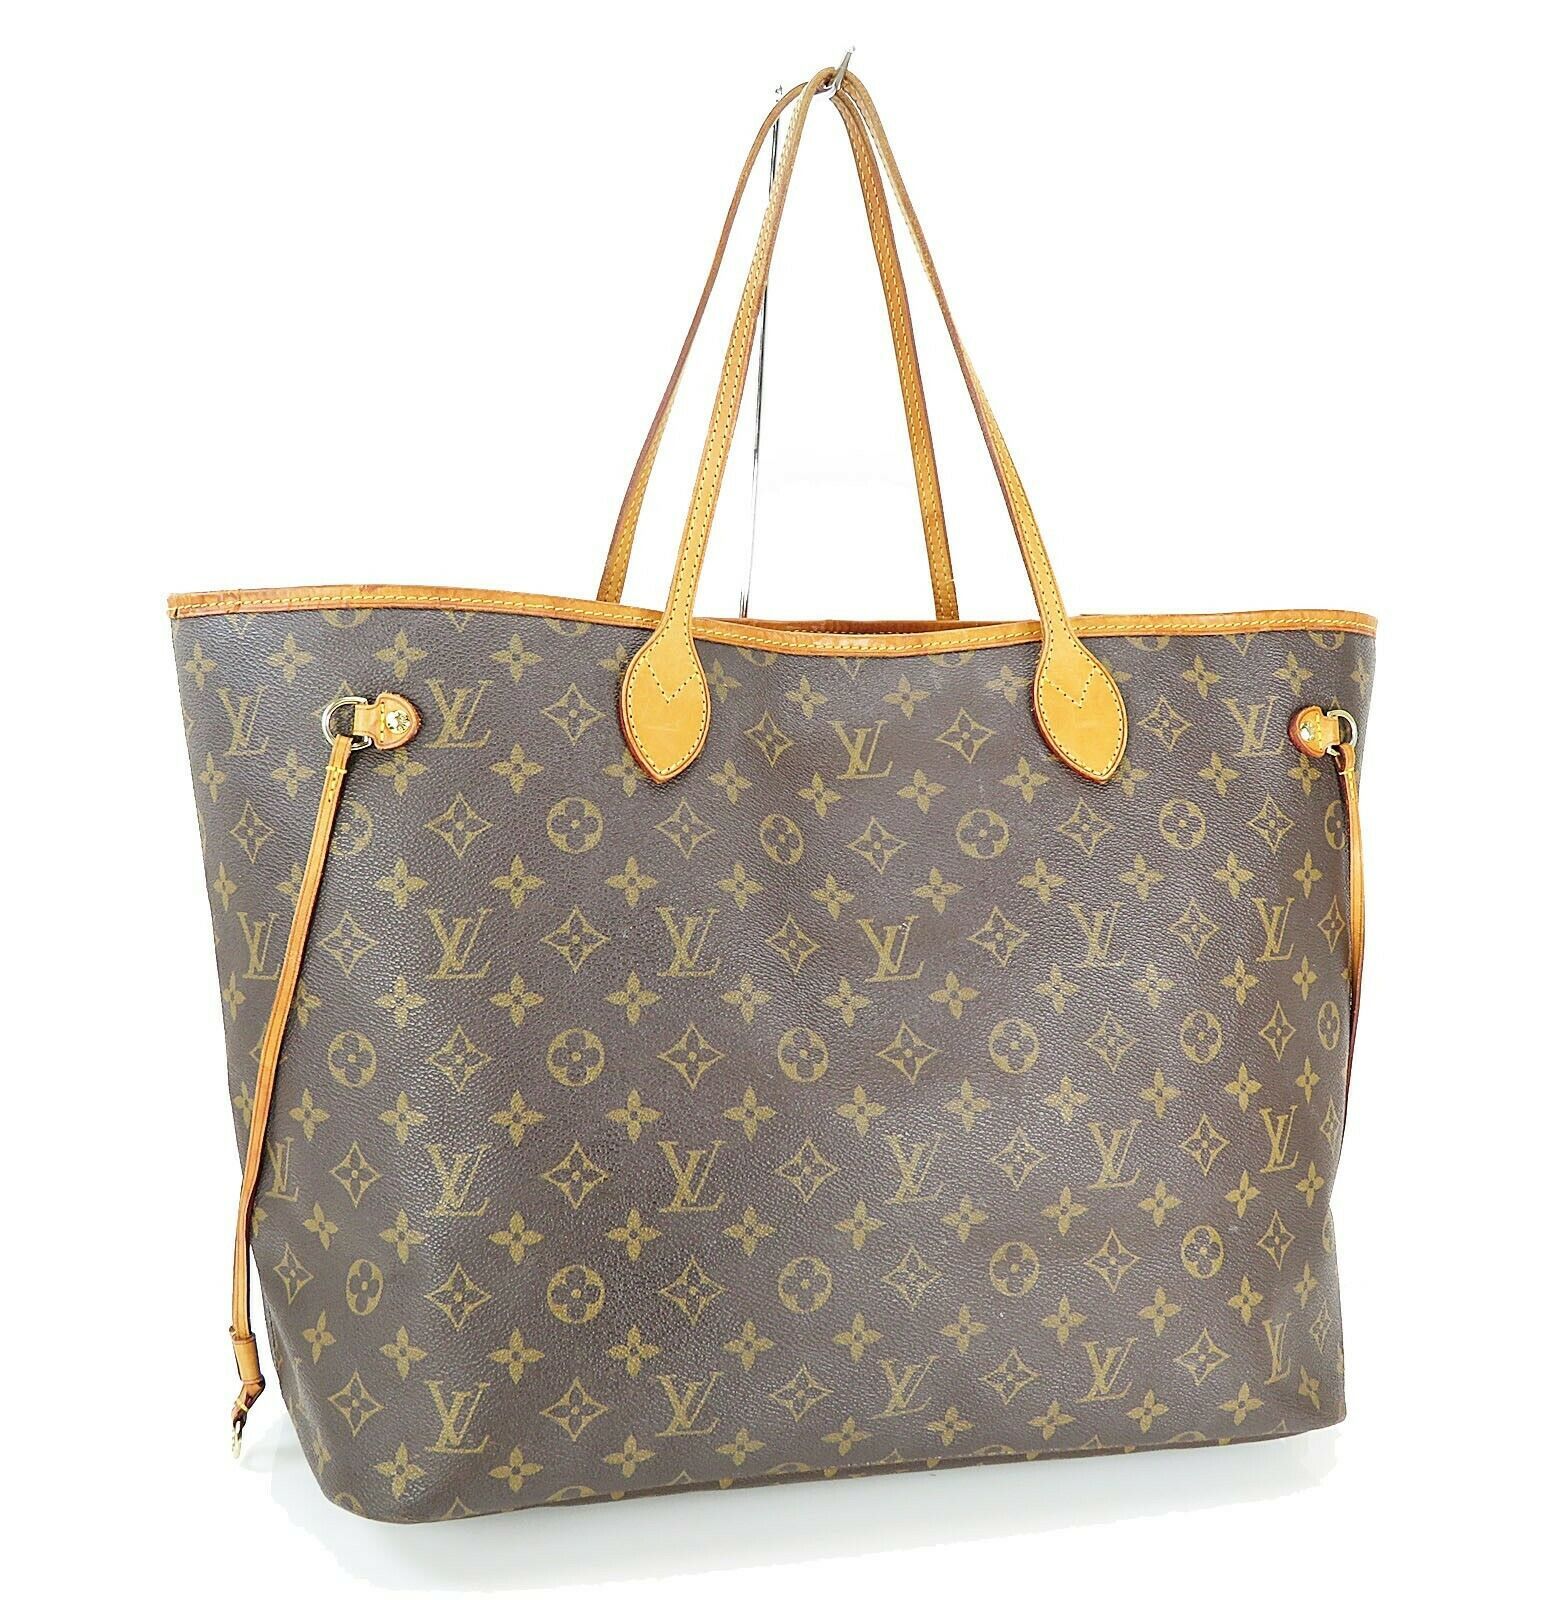 Authentic LOUIS VUITTON Neverfull GM Monogram Tote Bag Purse #33581 - Women&#39;s Bags & Handbags